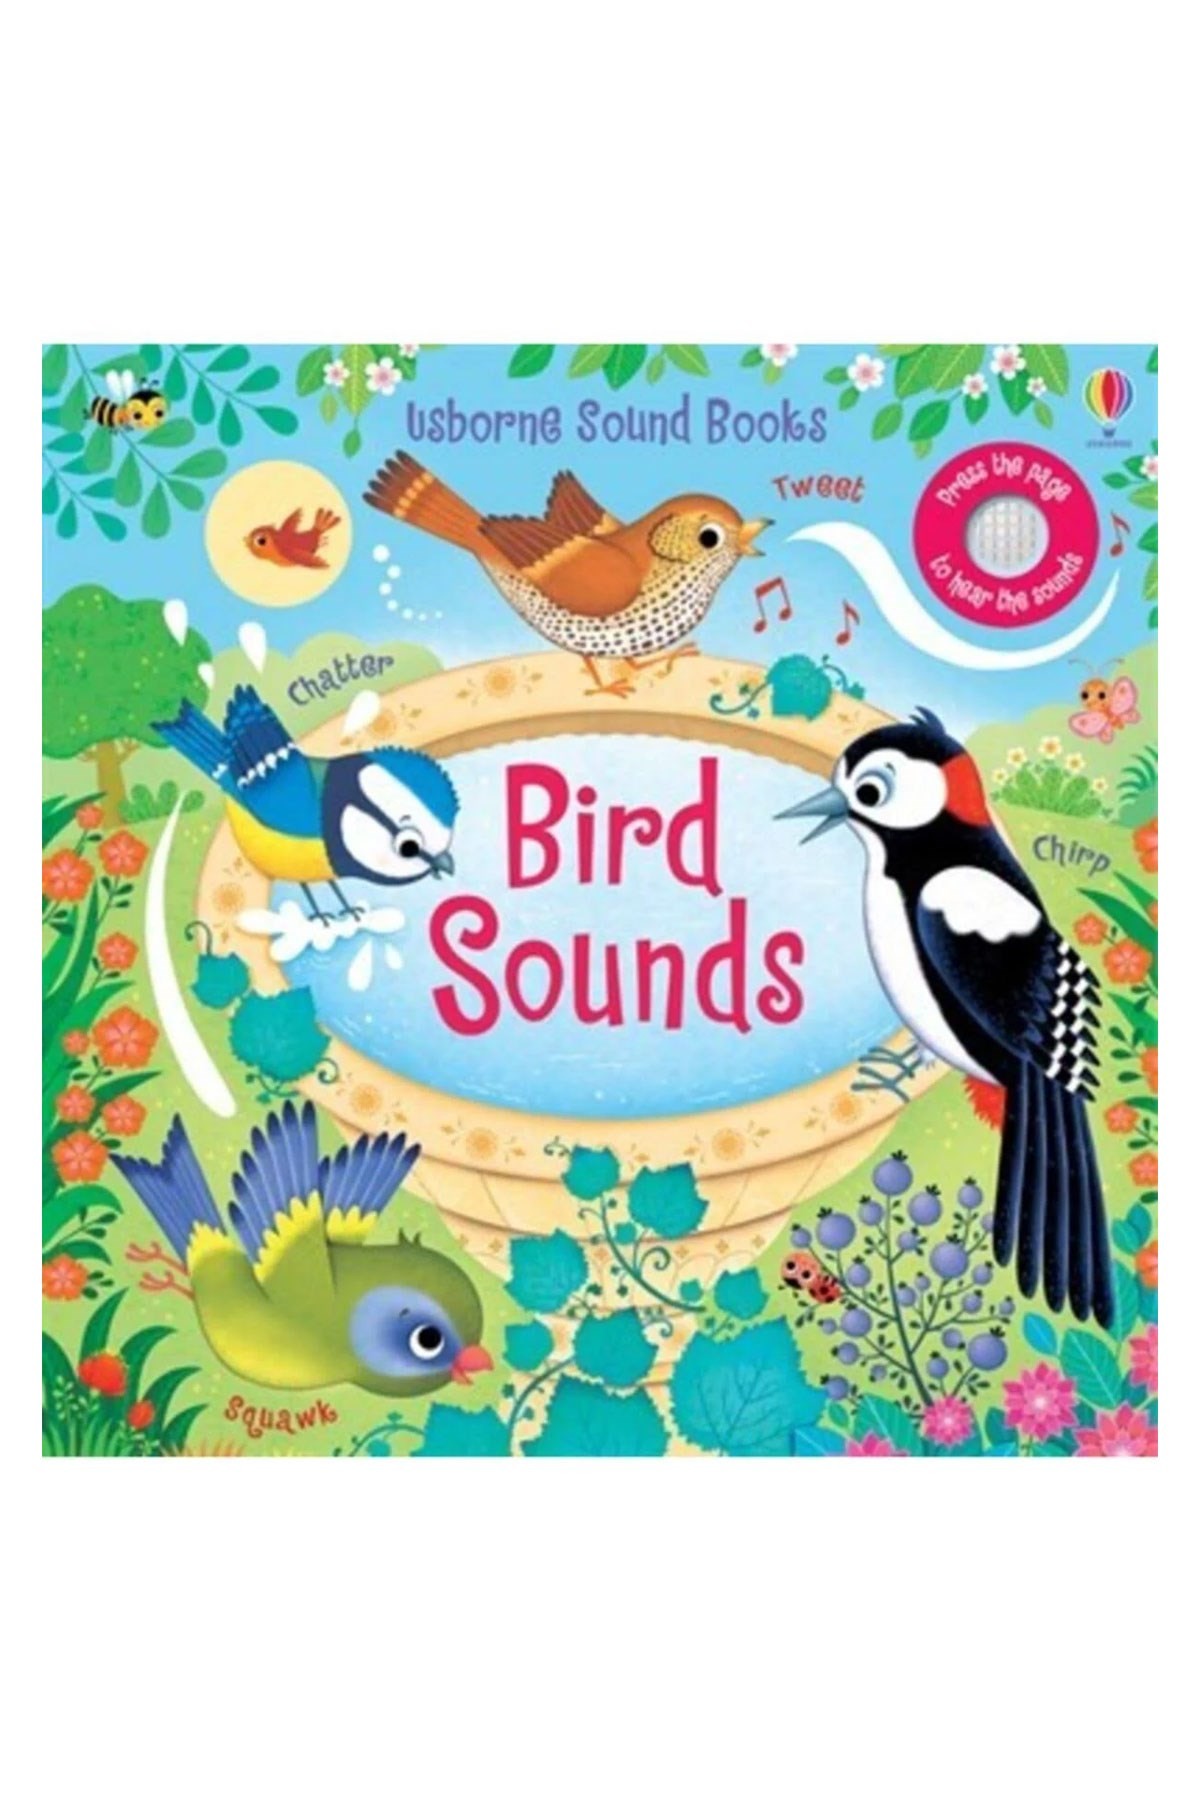 The Usborne Bird Sounds